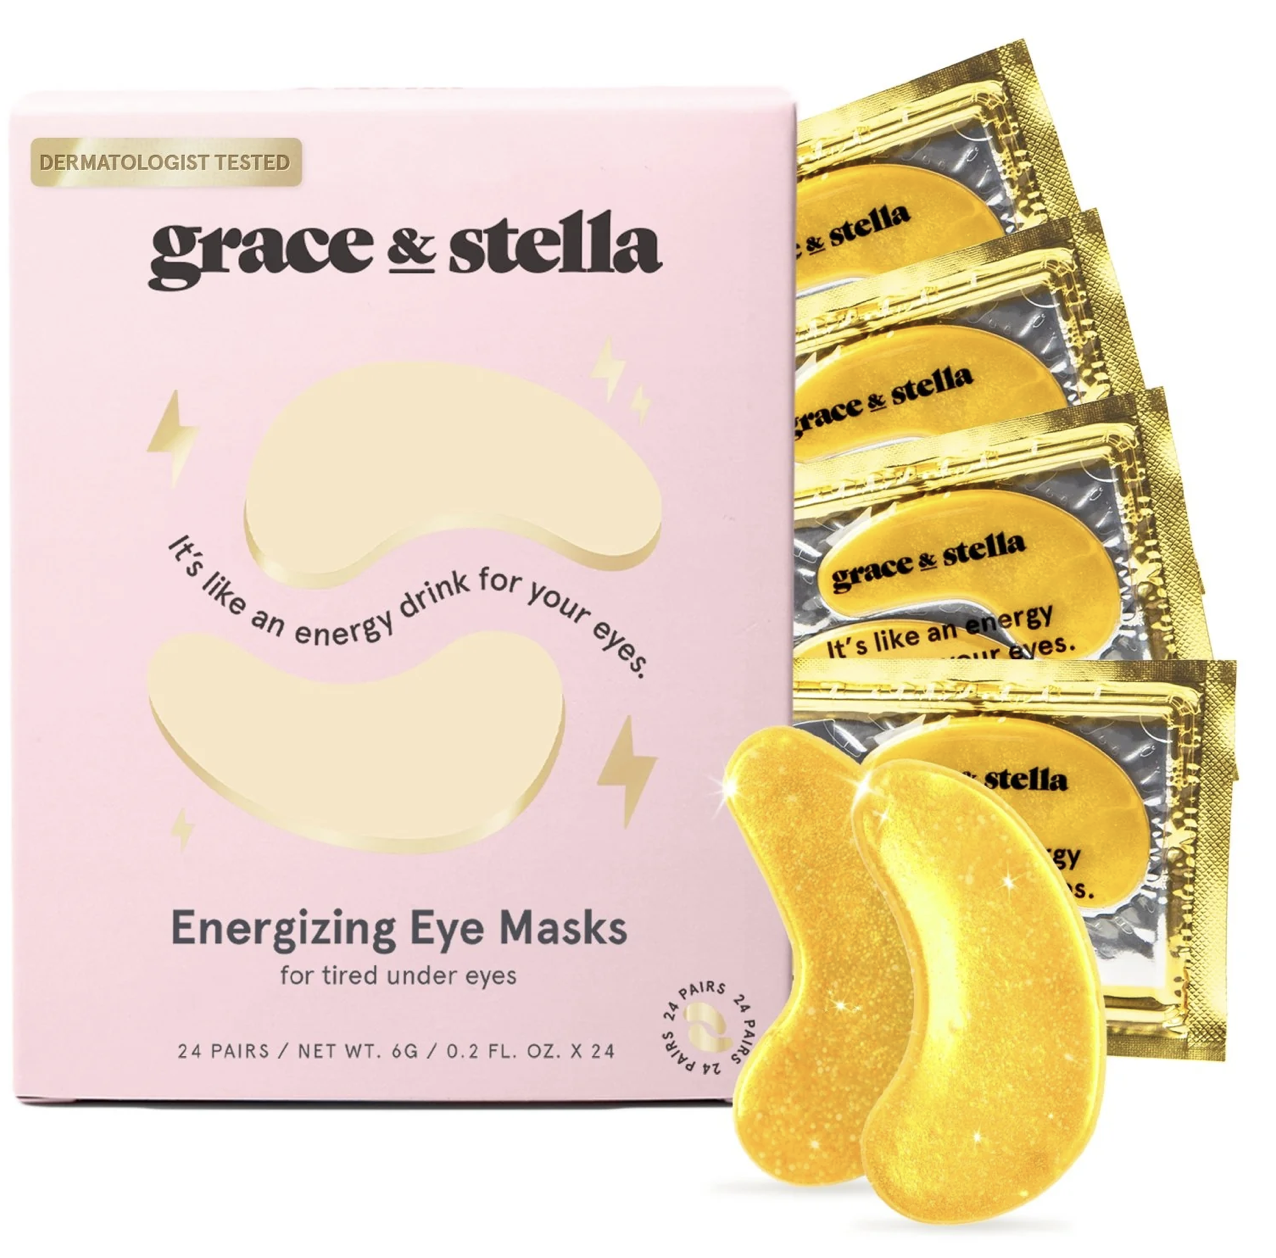 grace & Stella eye mask